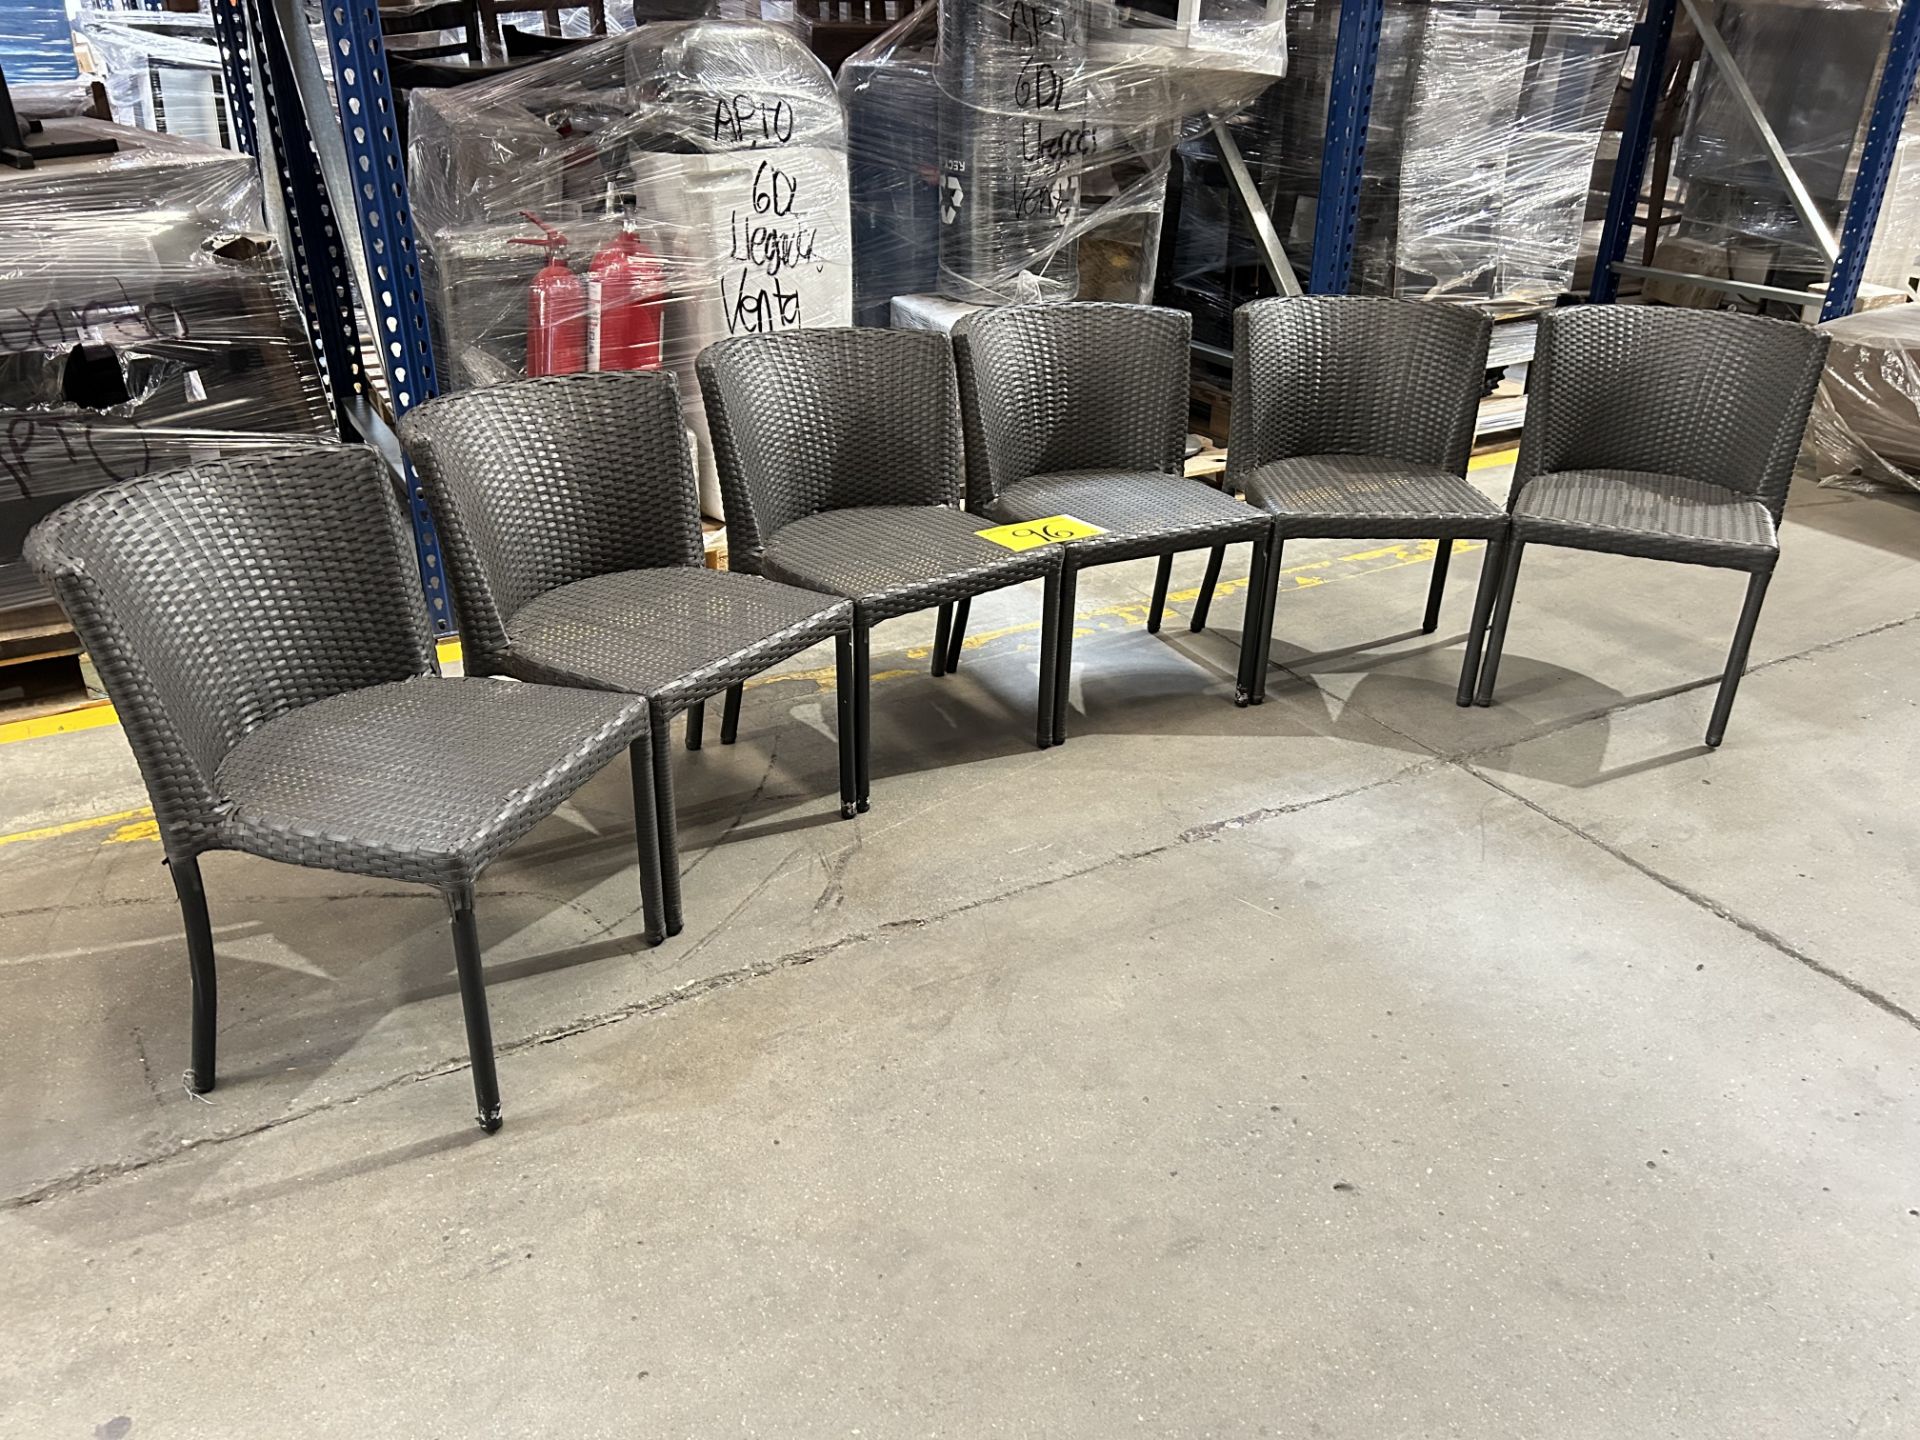 6 sillas de ratán respaldo curvo para exterior Color Café Medidas 55 cm x 62 cm x 74 cm (Equipo Usa - Image 3 of 5